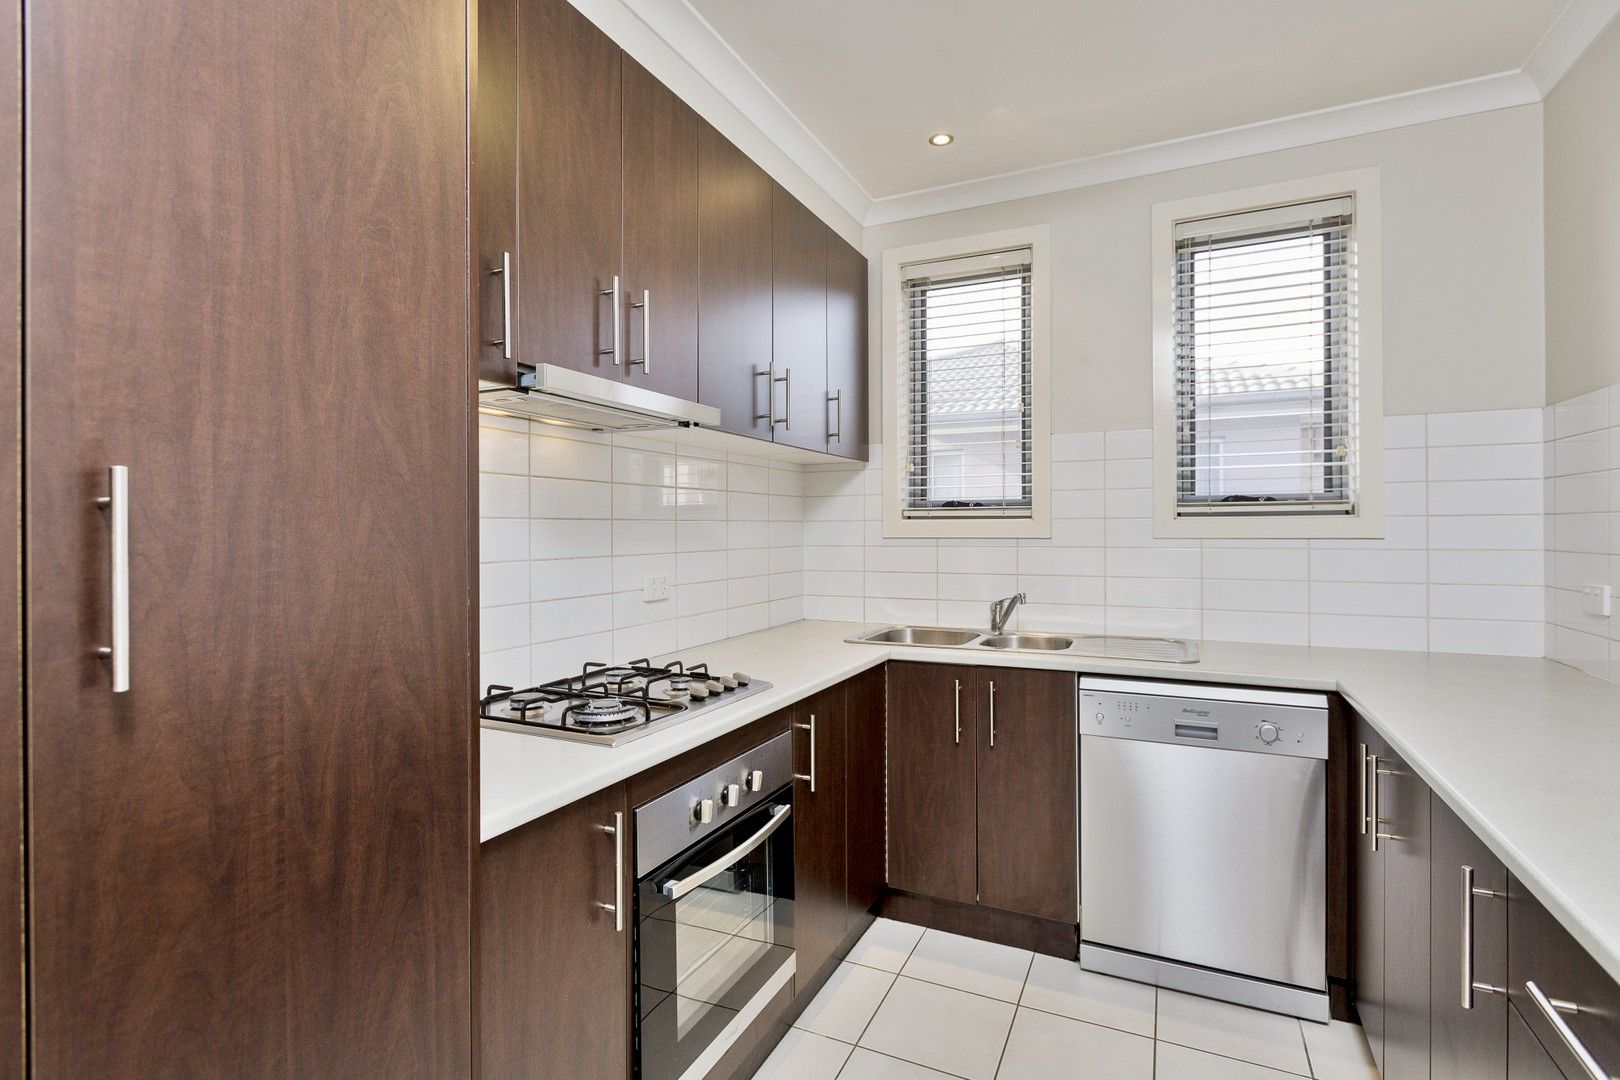 2 bedrooms Apartment / Unit / Flat in 2/579 Geelong Road BROOKLYN VIC, 3012